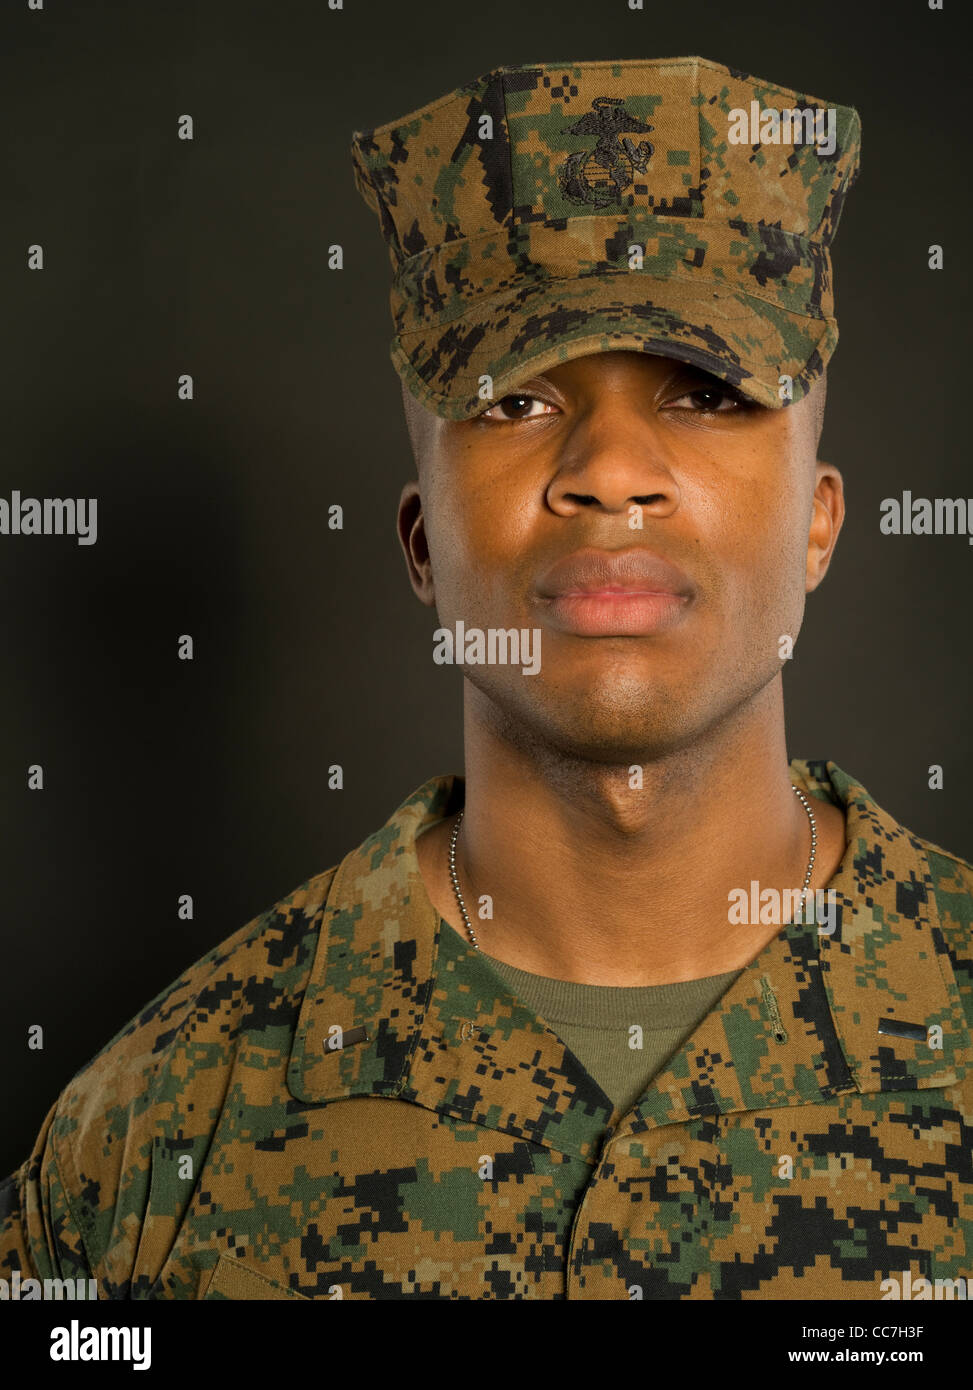 United States Marine Corps Officer in Marine Corps Combat Utility Uniform  MARPAT digital camouflage pattern woodland pattern Stock Photo - Alamy